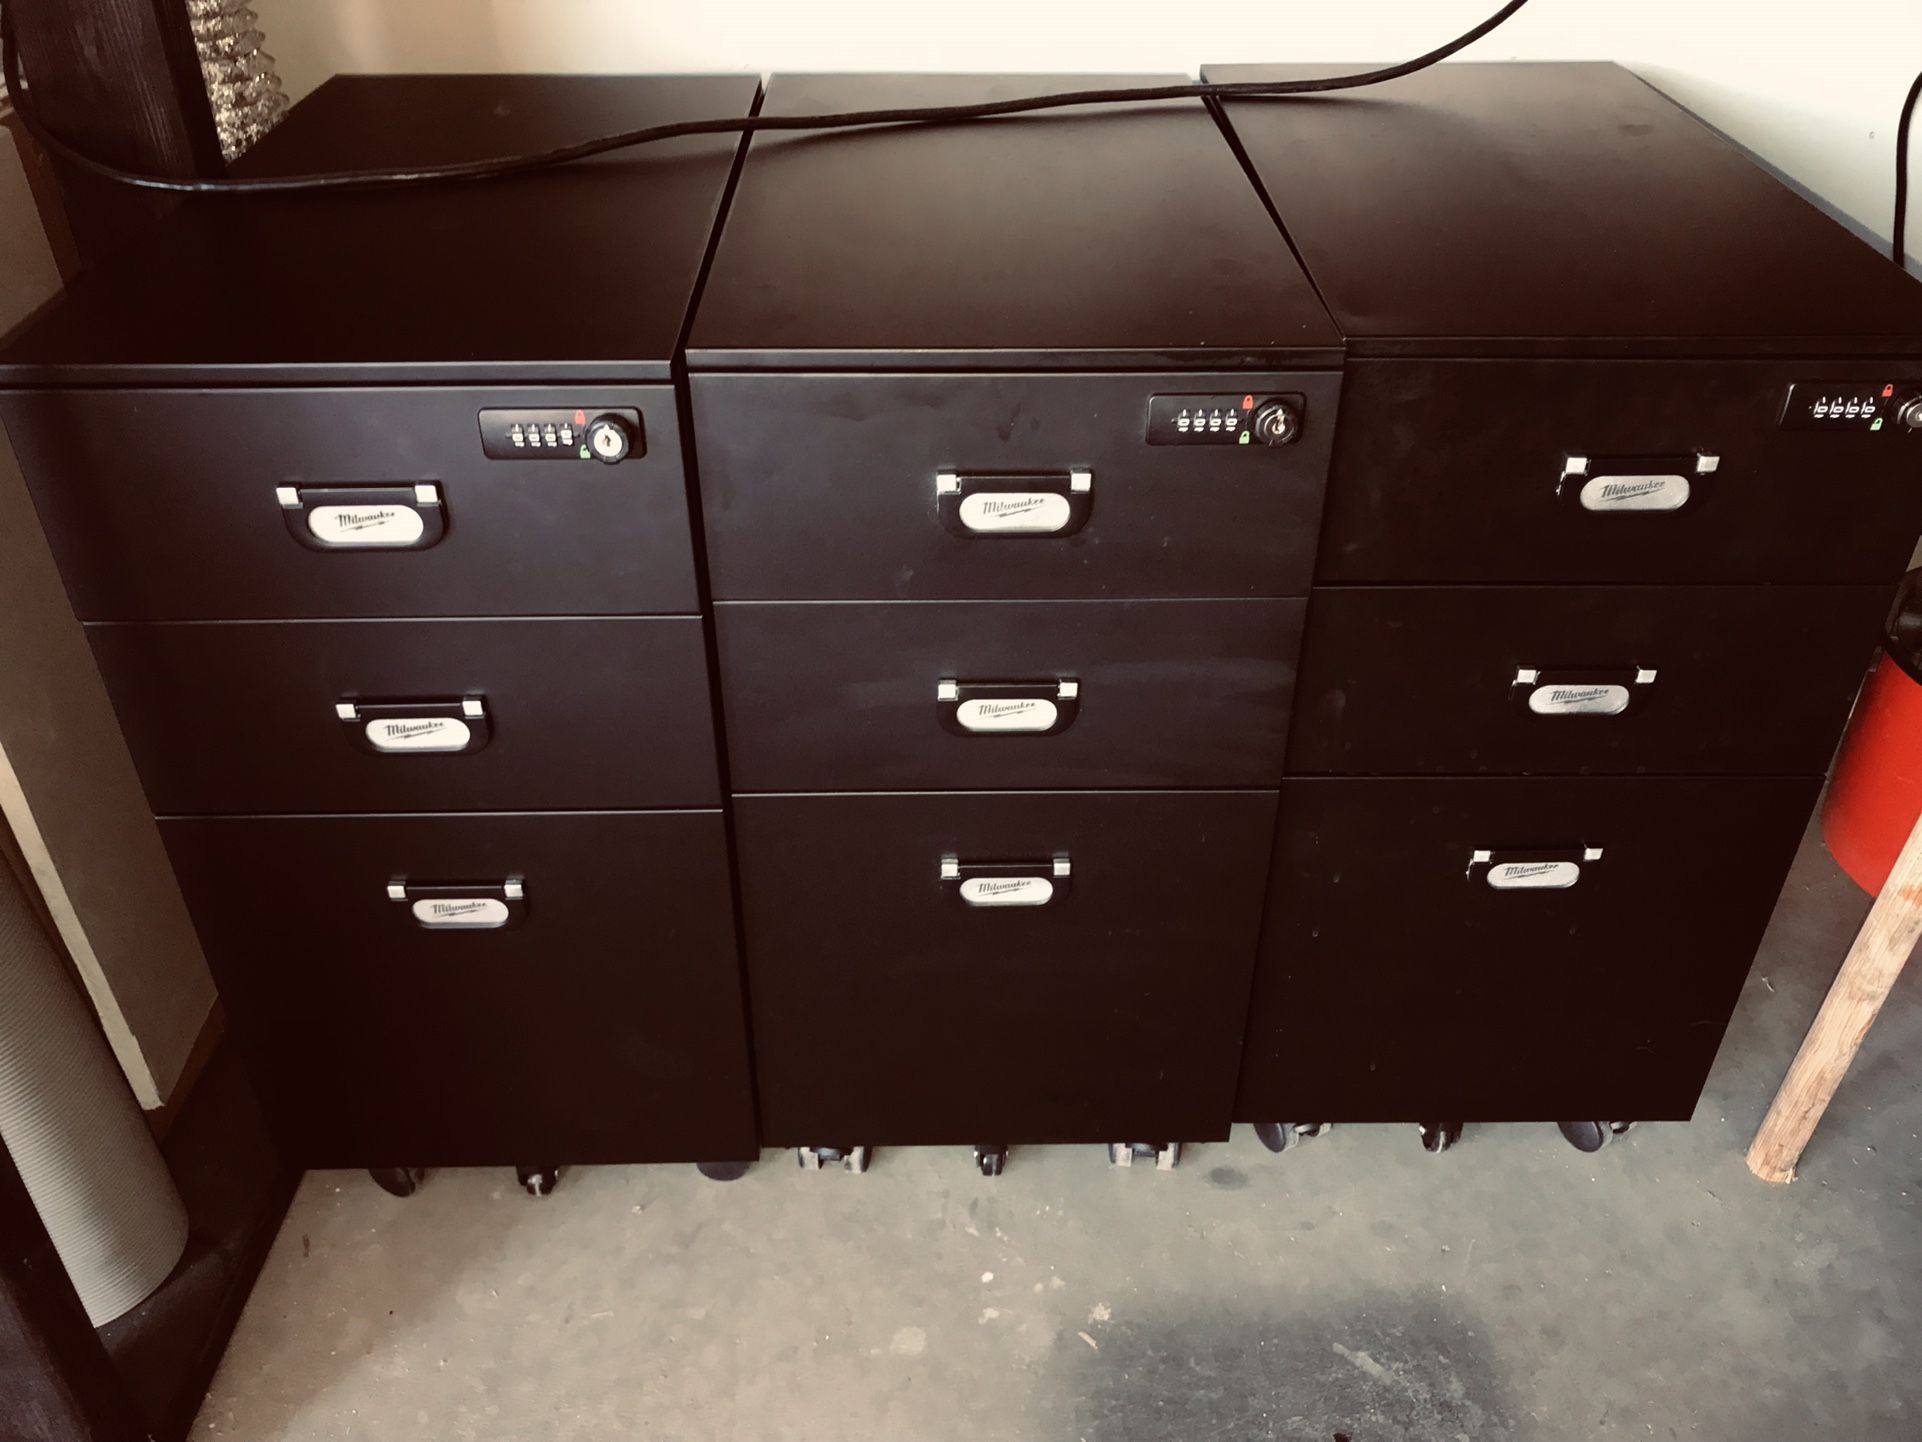 file cabinets 